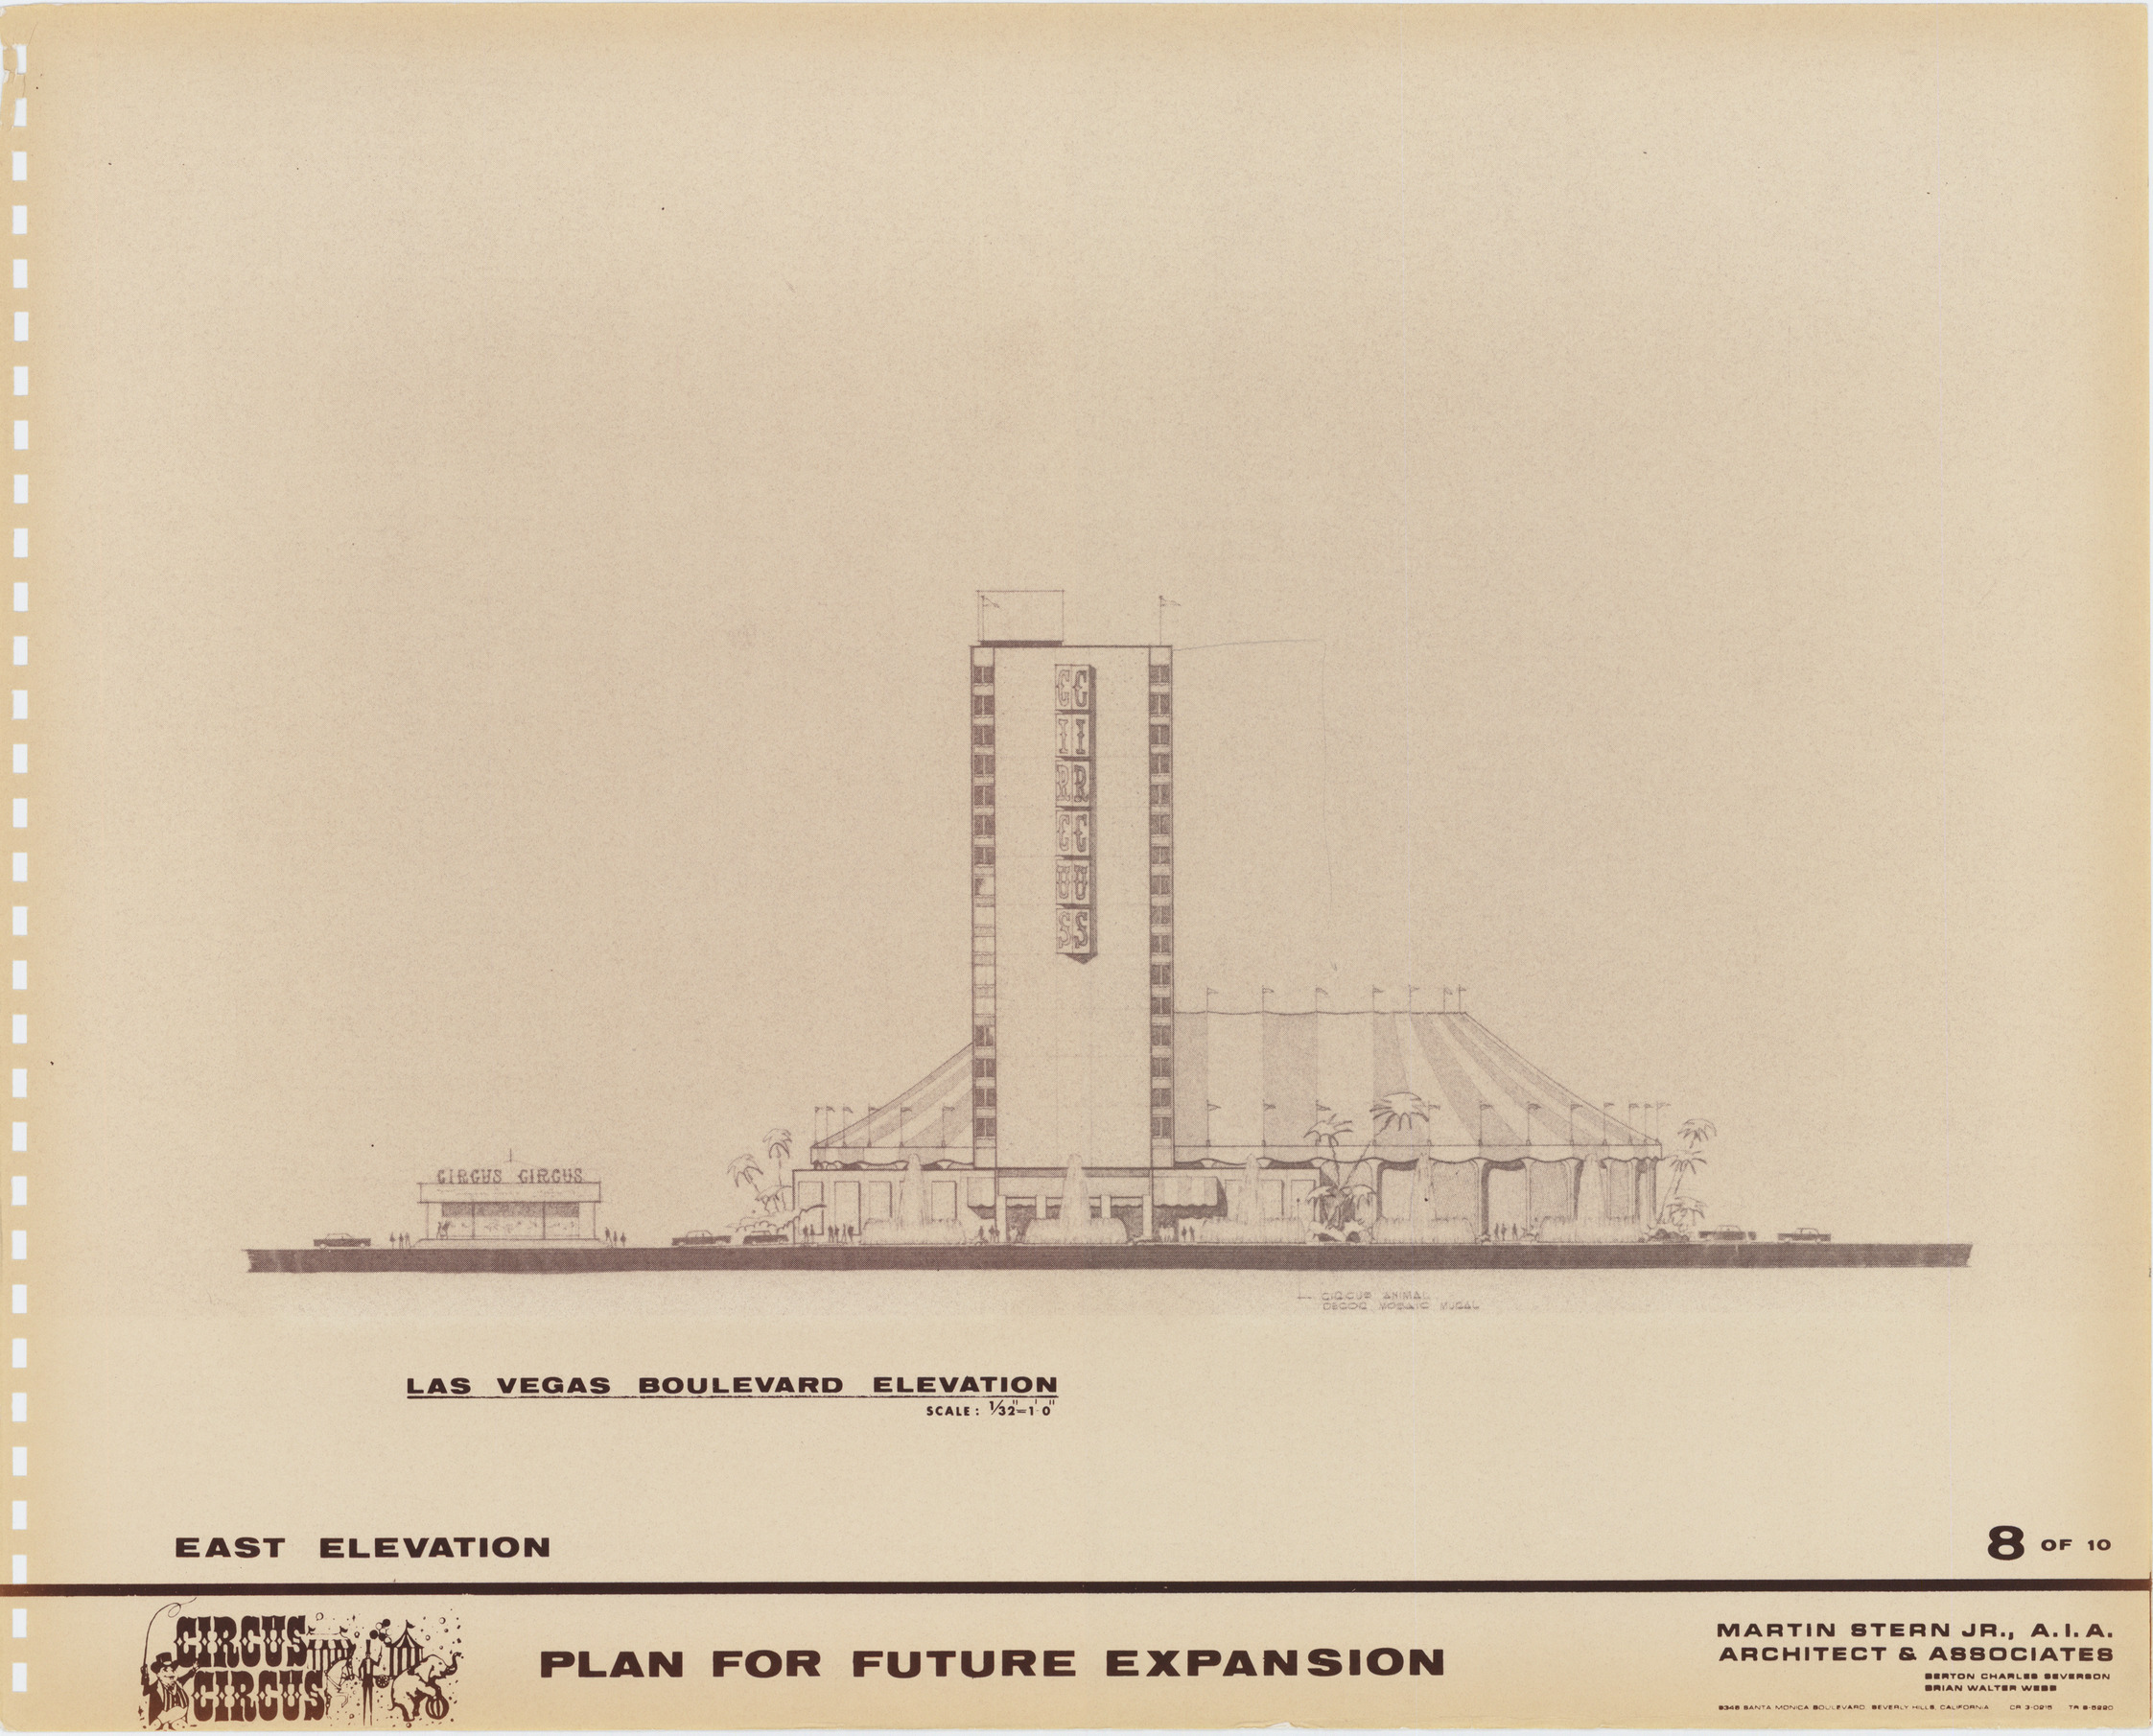 Proposal for Circus Circus expansion (Las Vegas), image 10